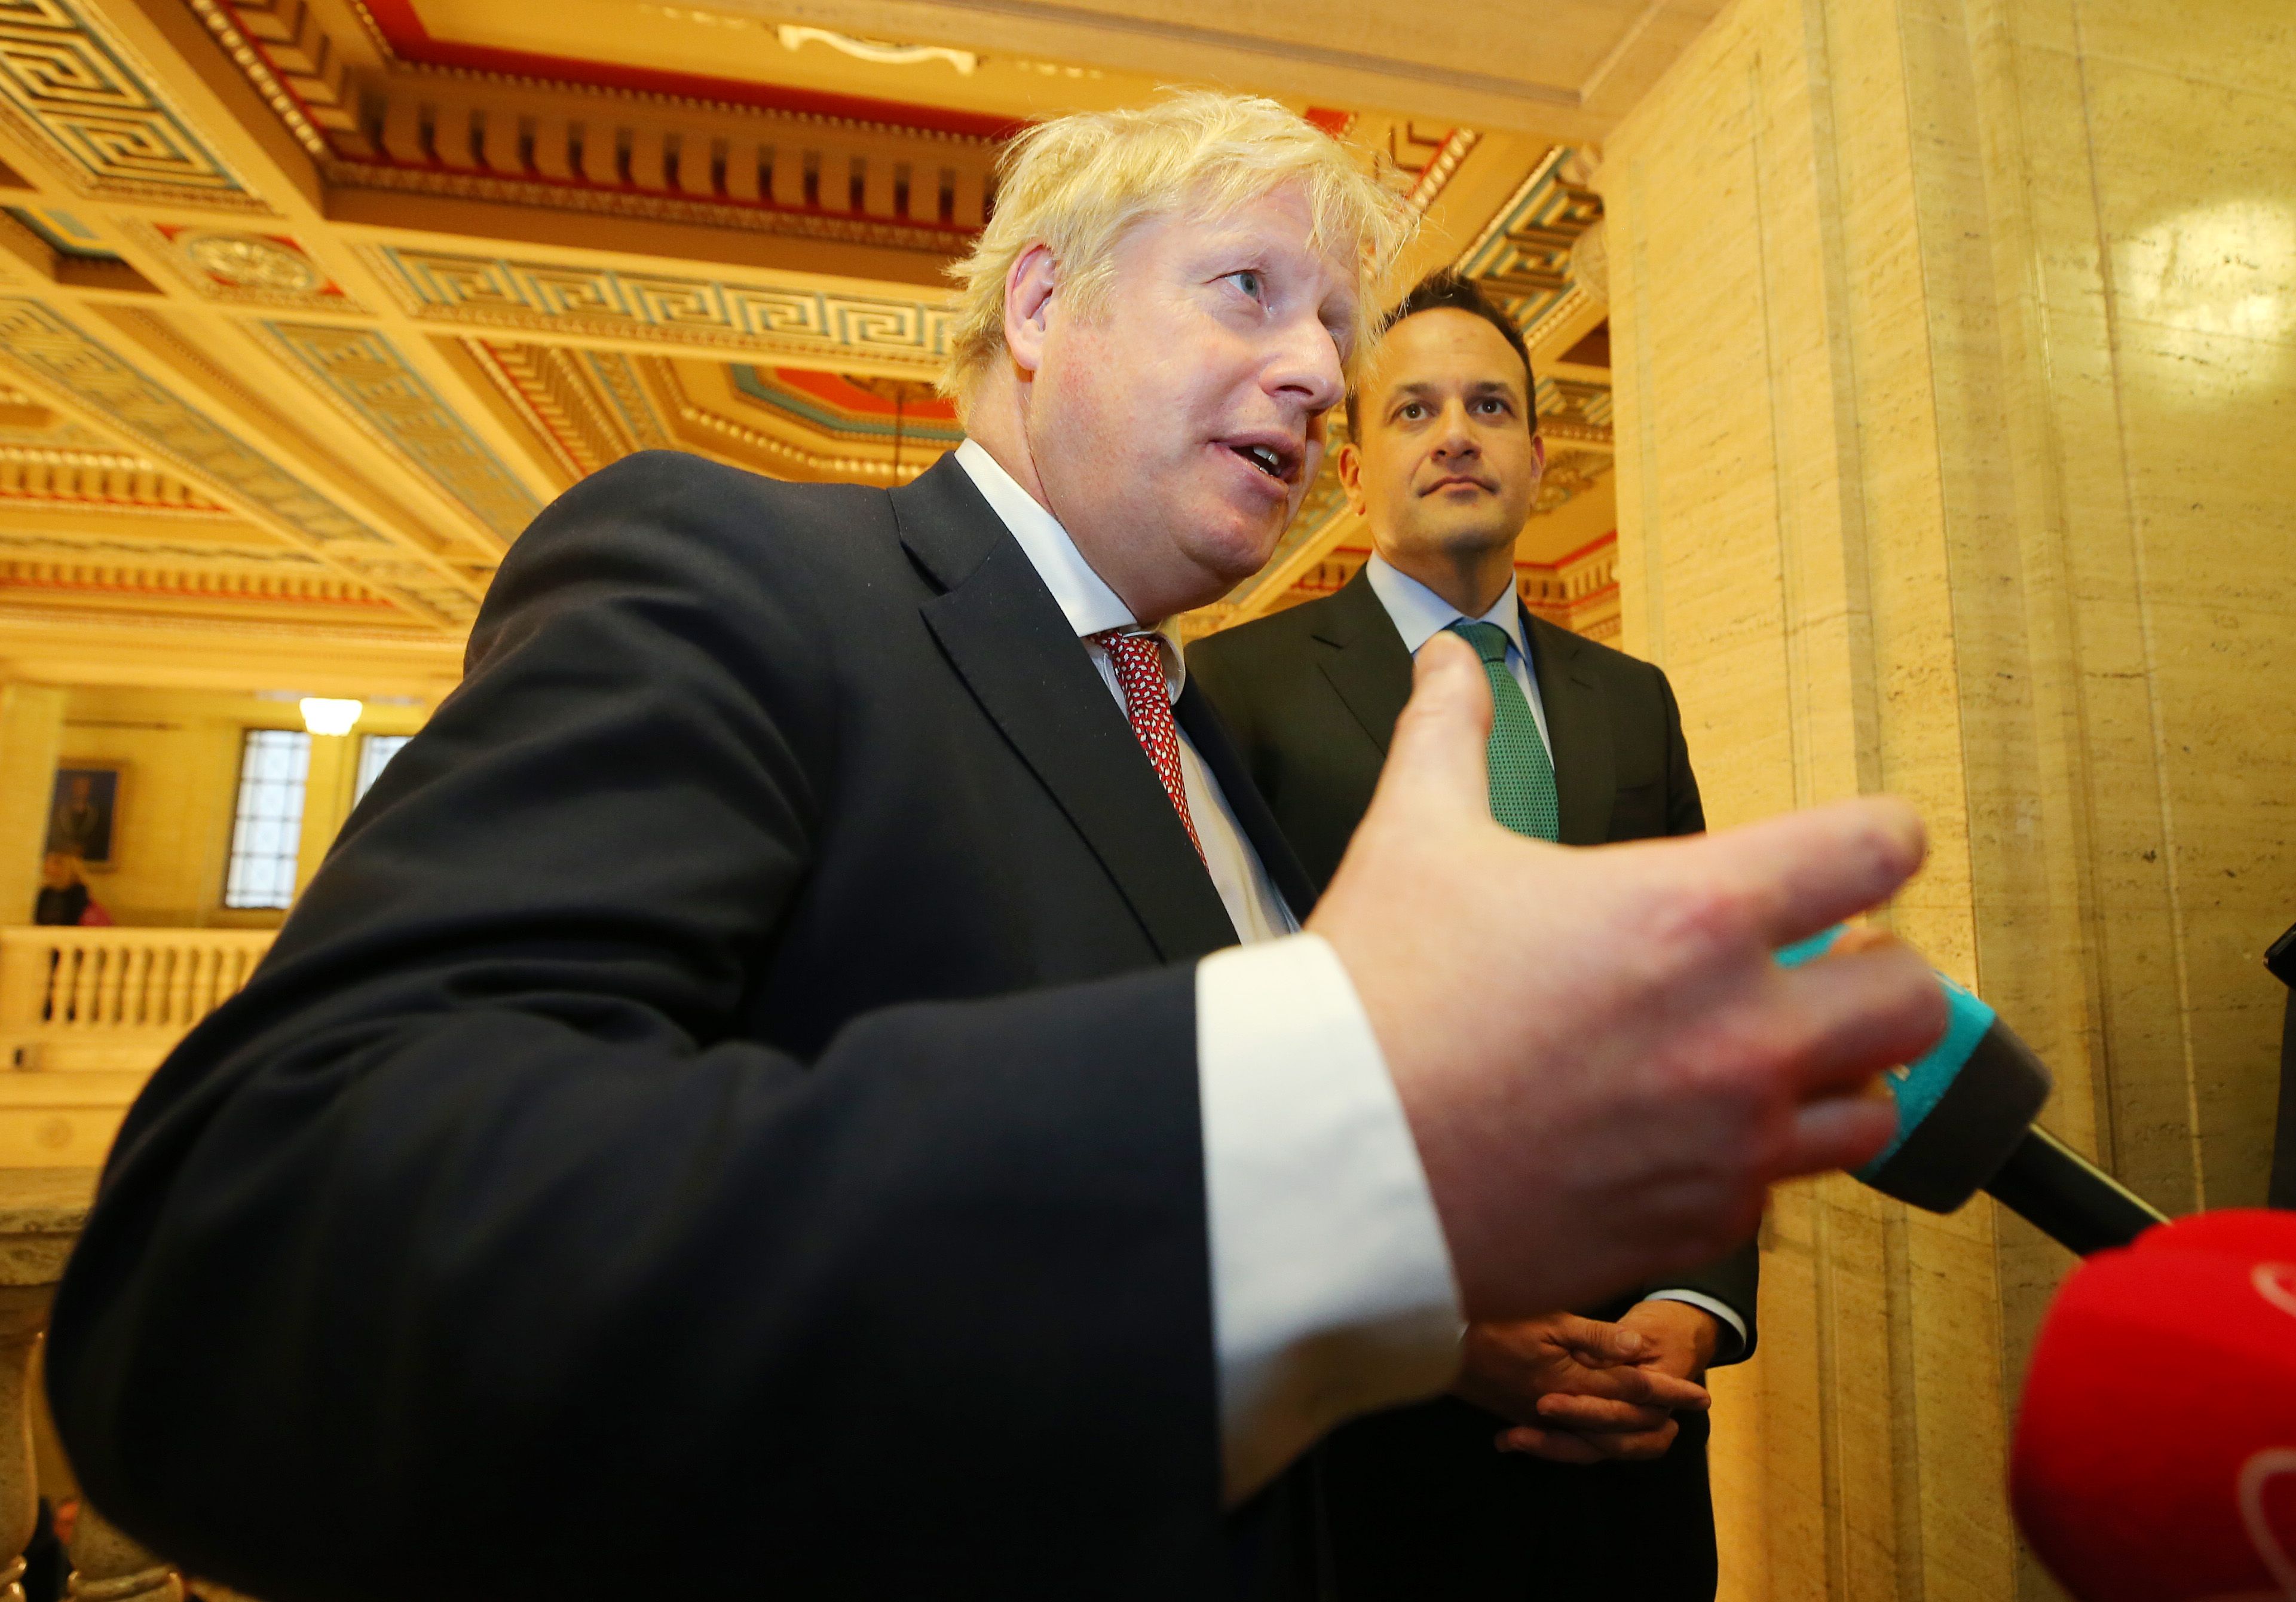 PIE IN THE SKY: Boris Johnson wants to build a bridge between Scotland and Northern Ireland 